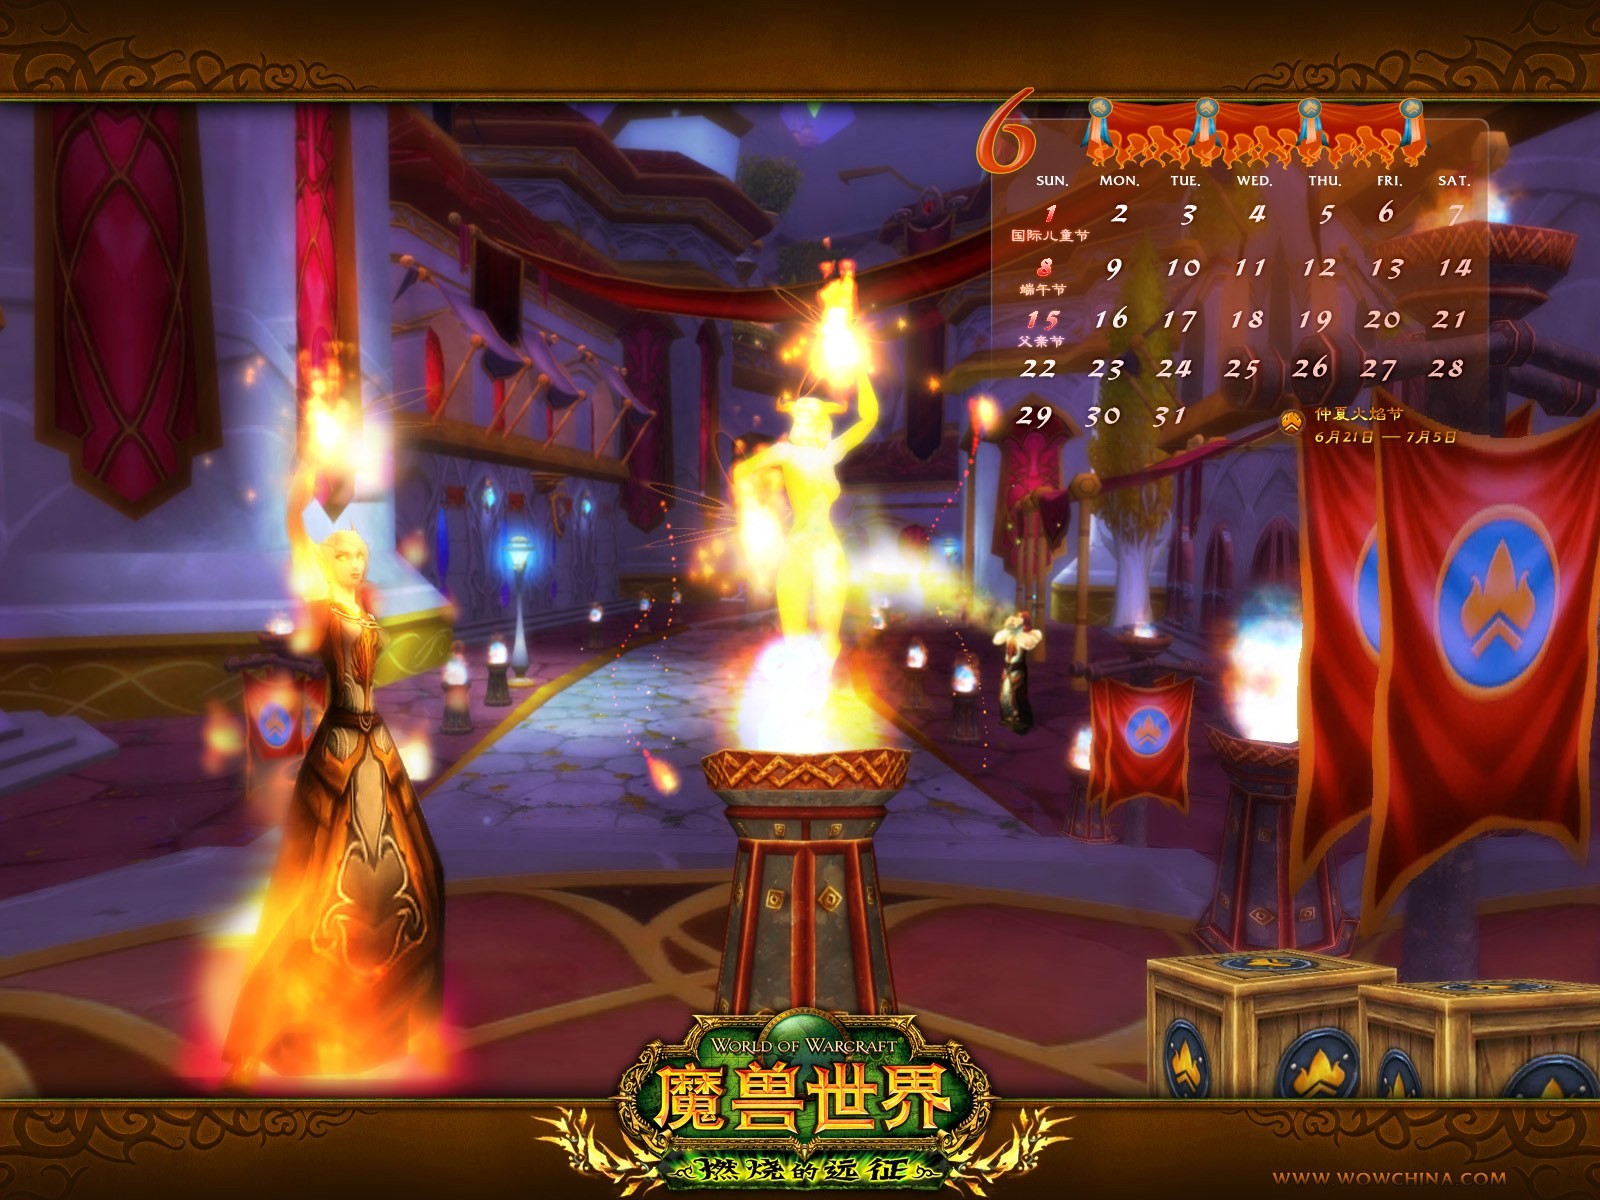 World of Warcraft: fondo de pantalla oficial de The Burning Crusade (2) #24 - 1600x1200